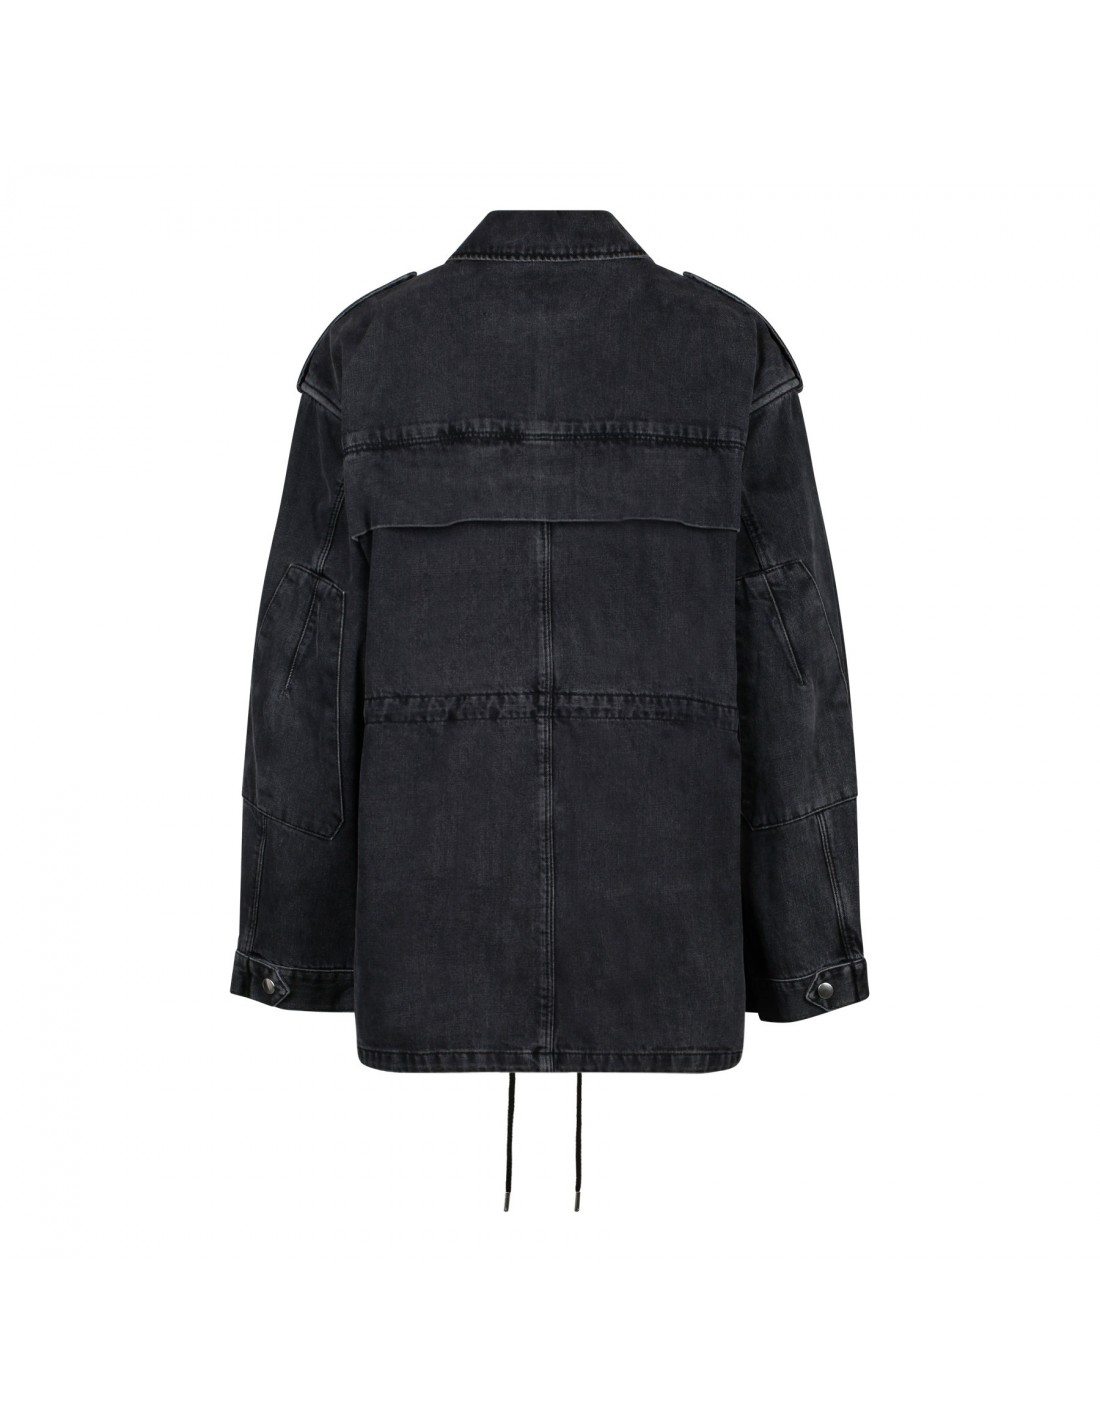 Elize faded black jacket